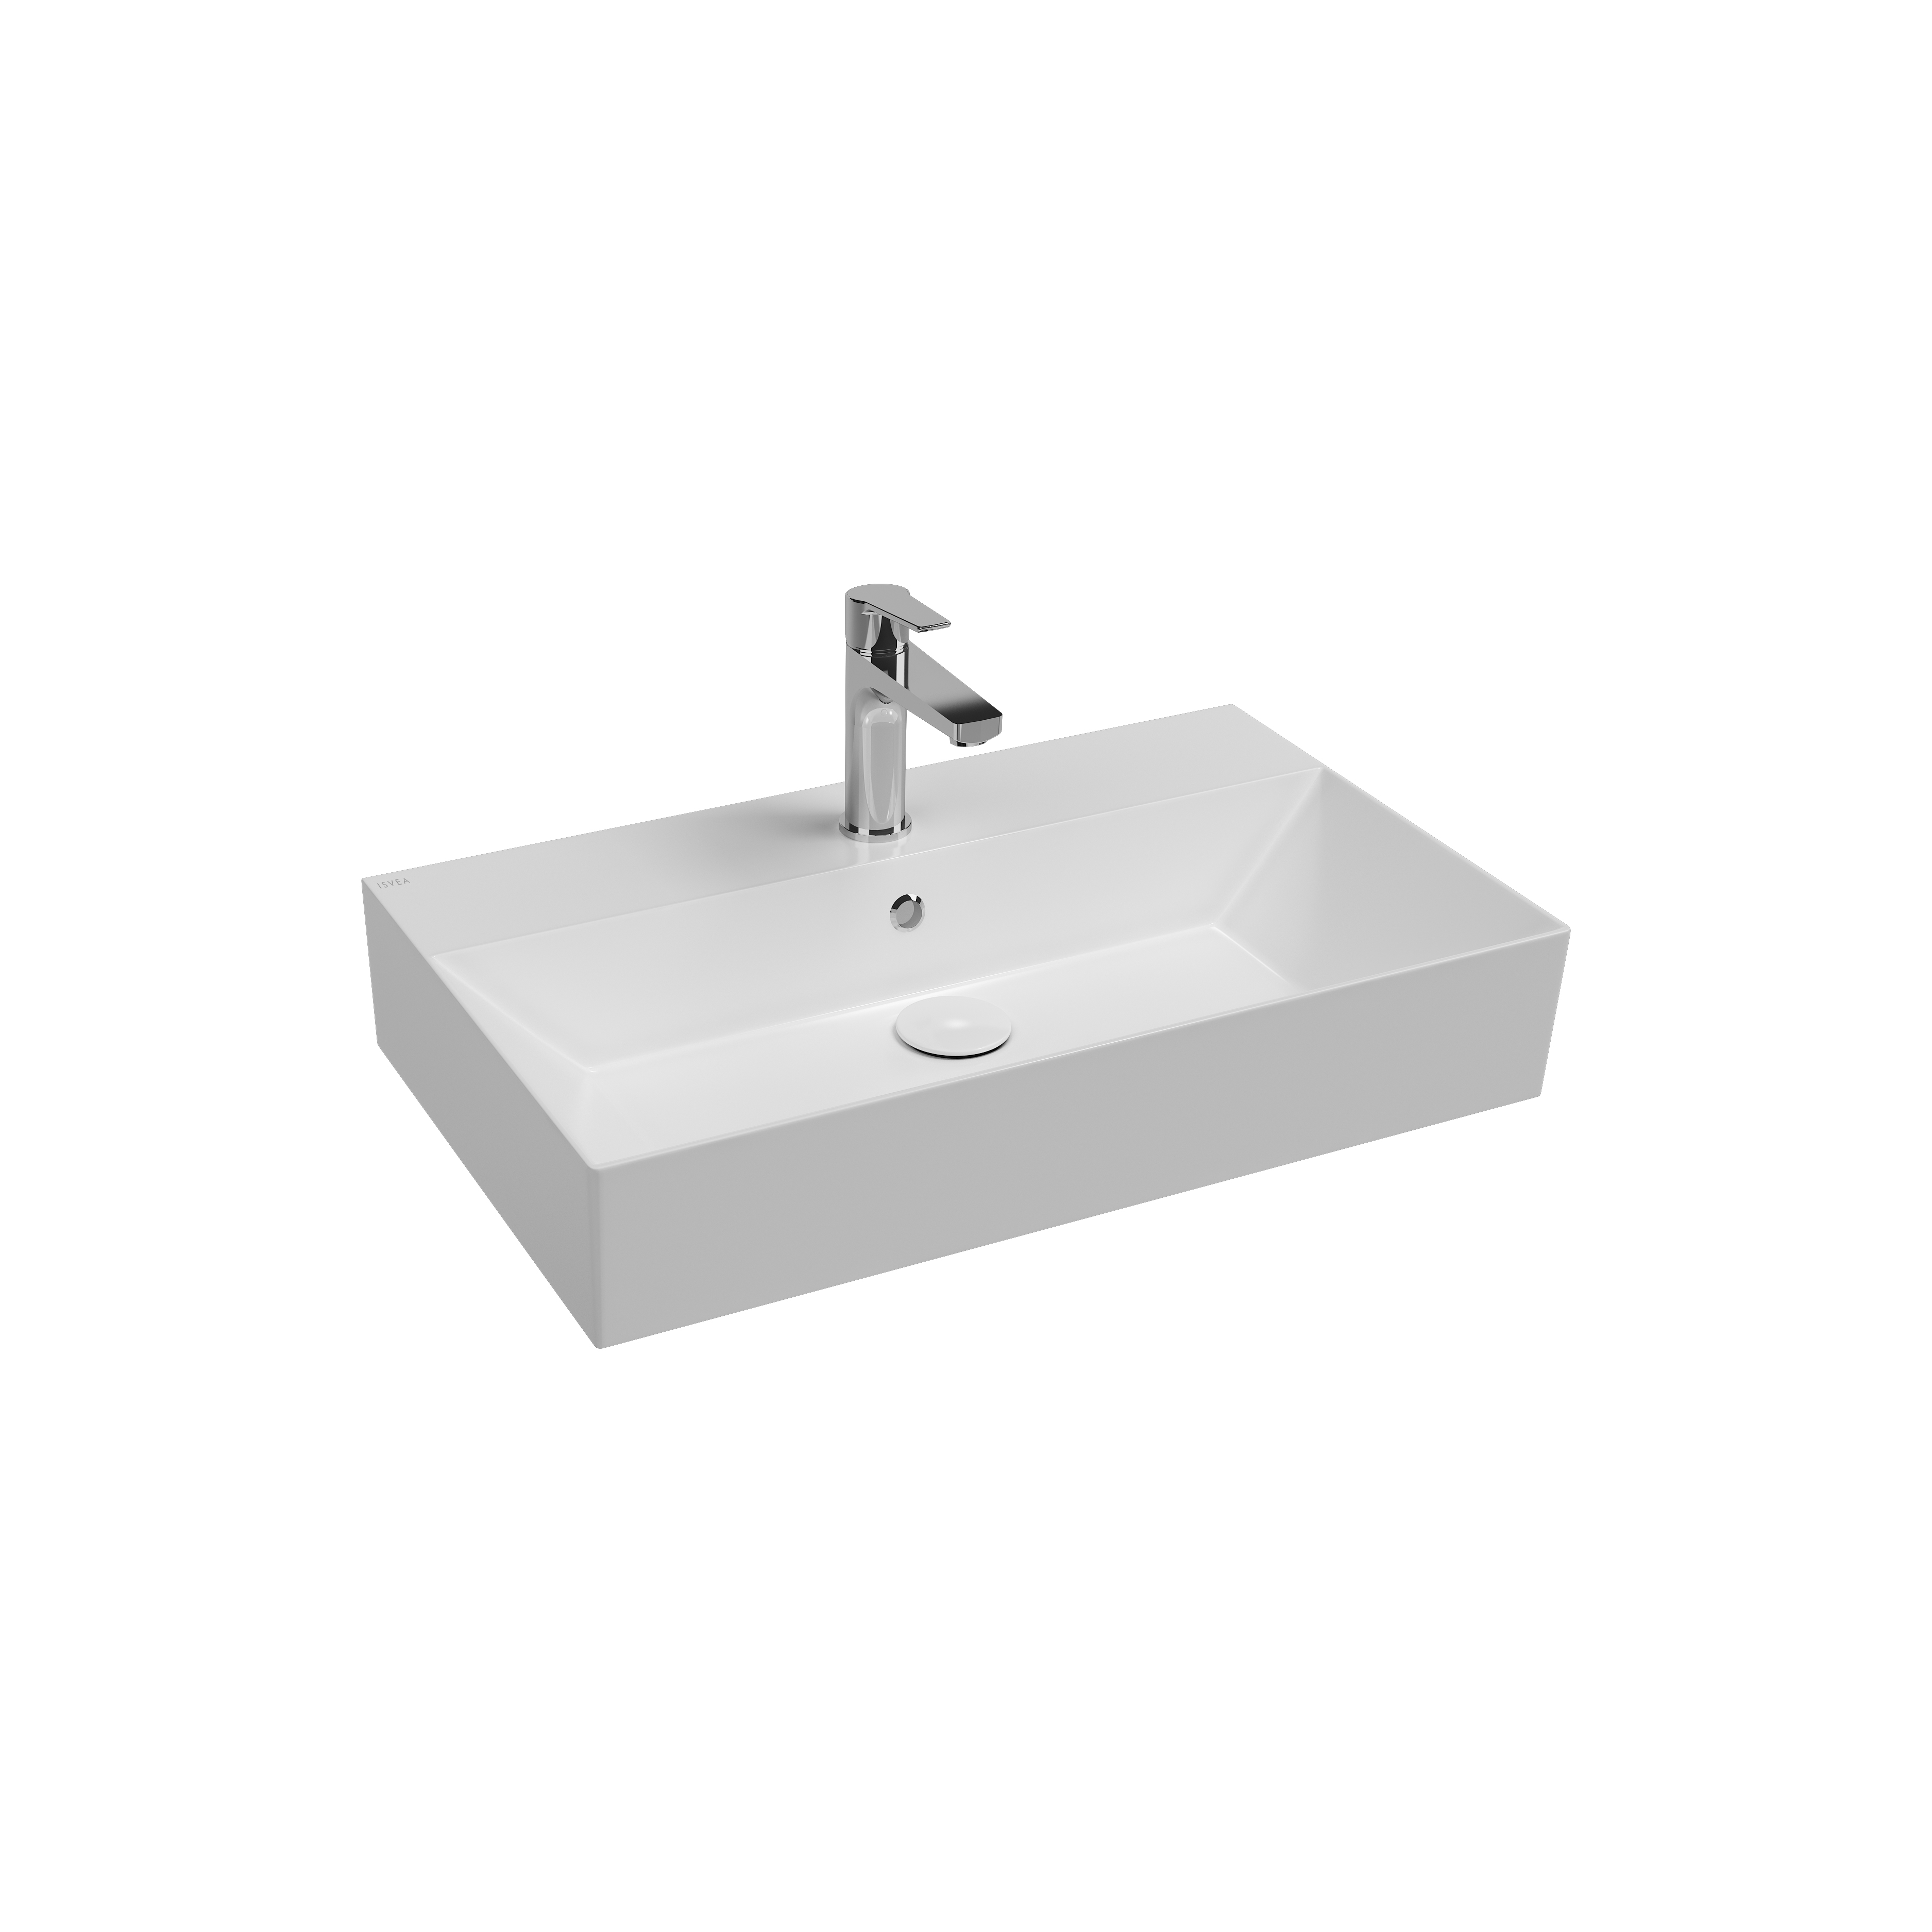 SistemaZ Countertop Washbasin, 70 cm